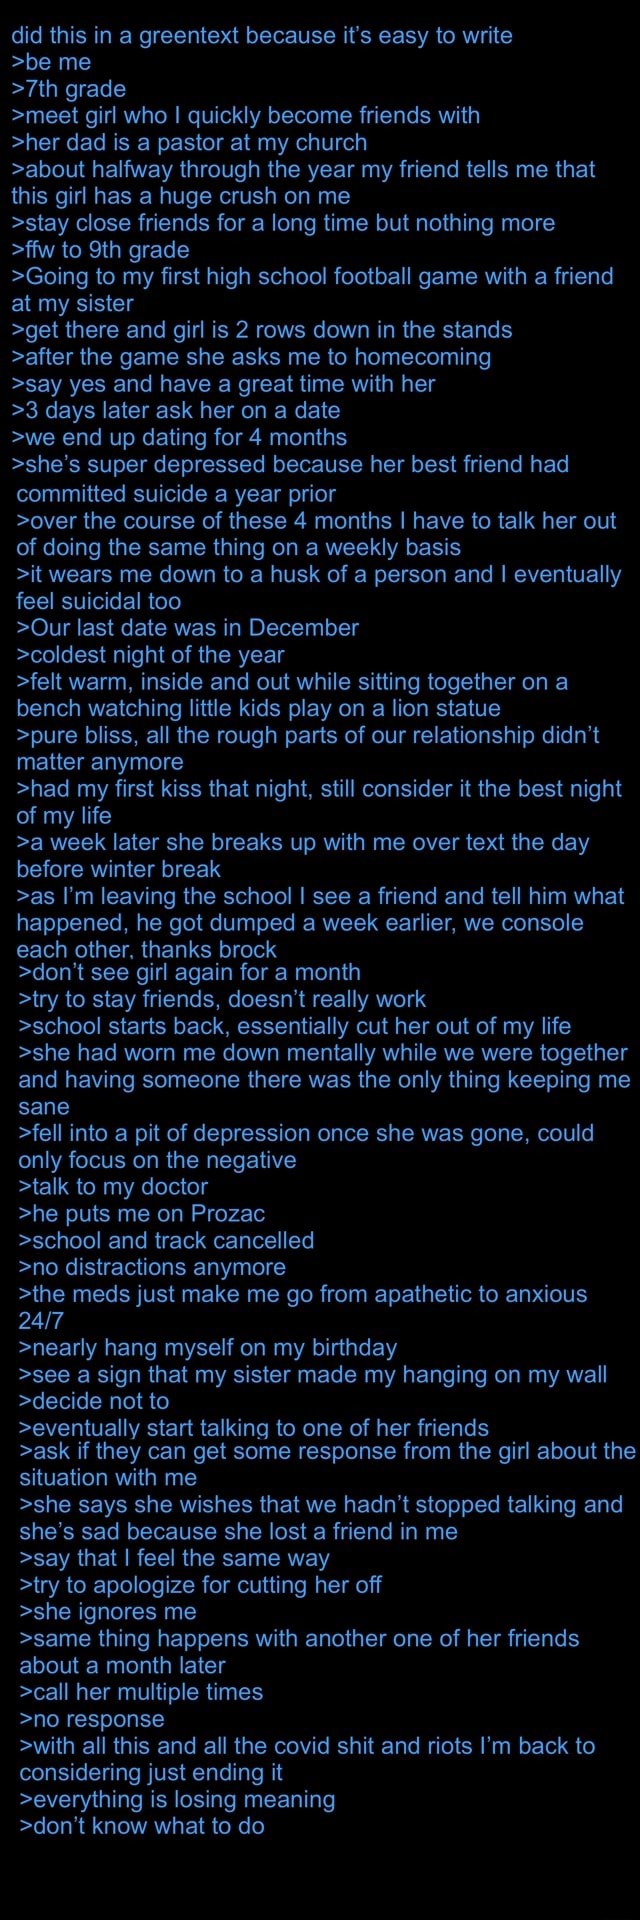 dating while depressed reddit